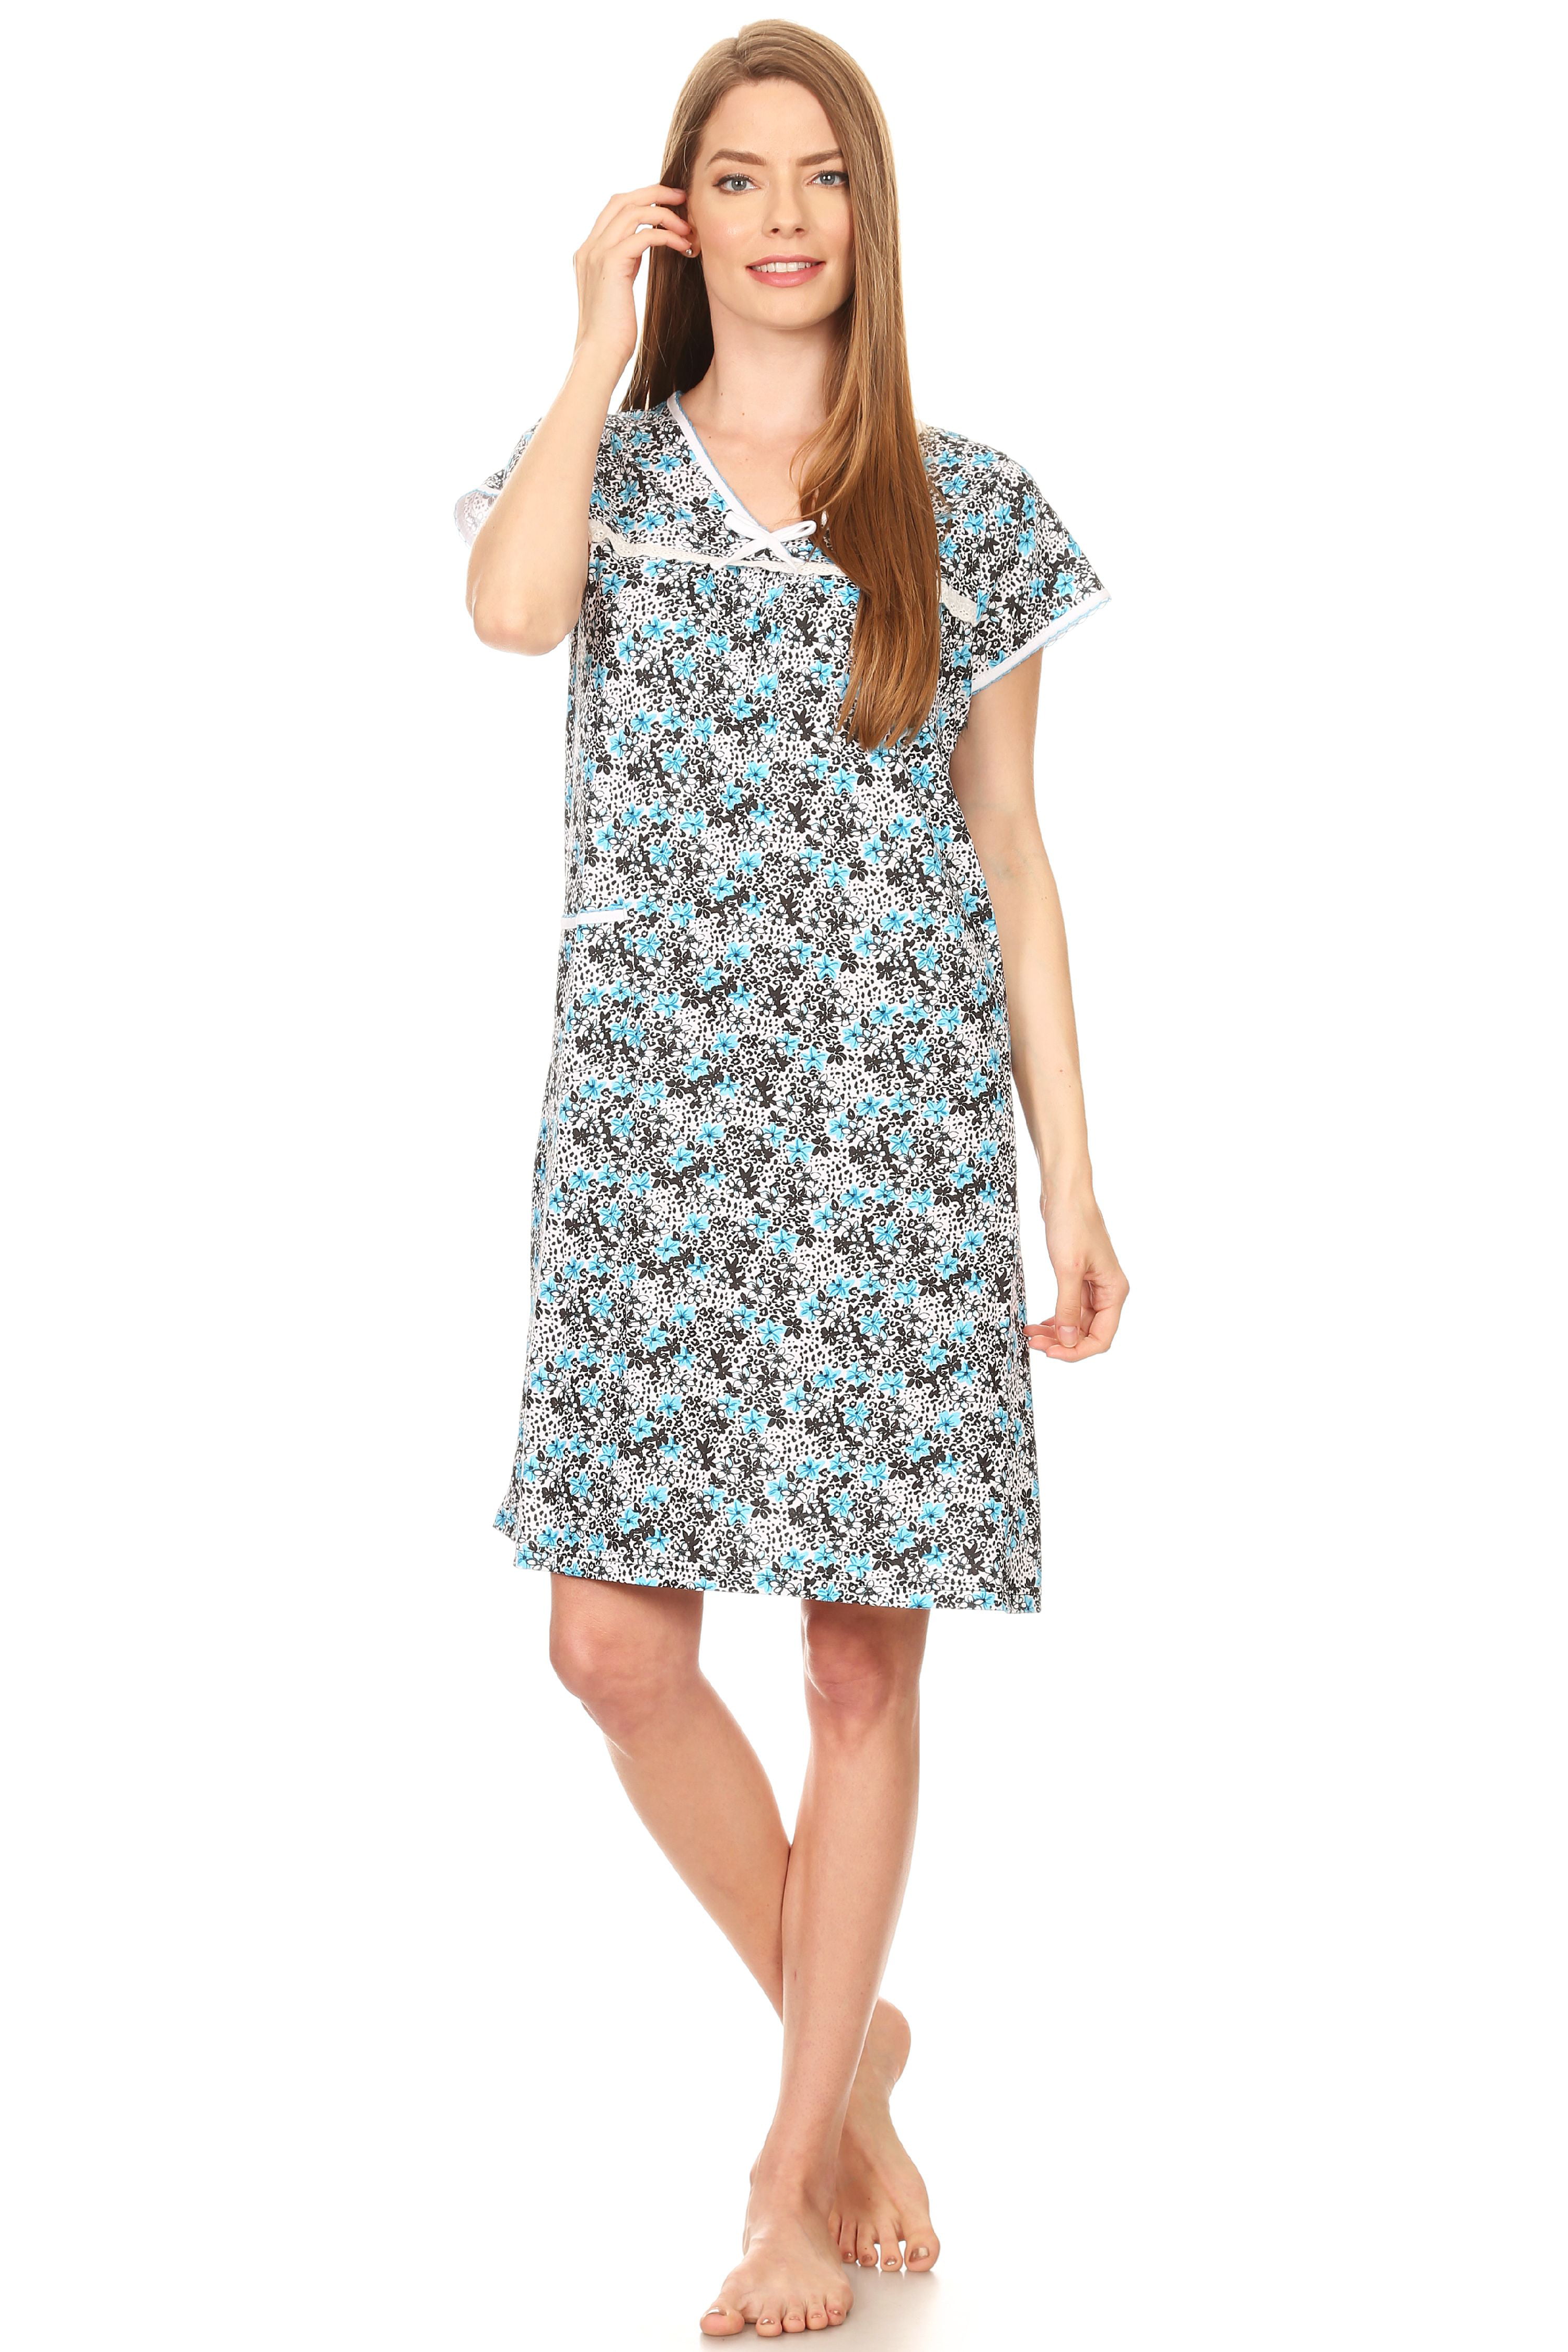 Lati Fashion - 915 Womens Nightgown Sleepwear Cotton Pajamas - Woman ...